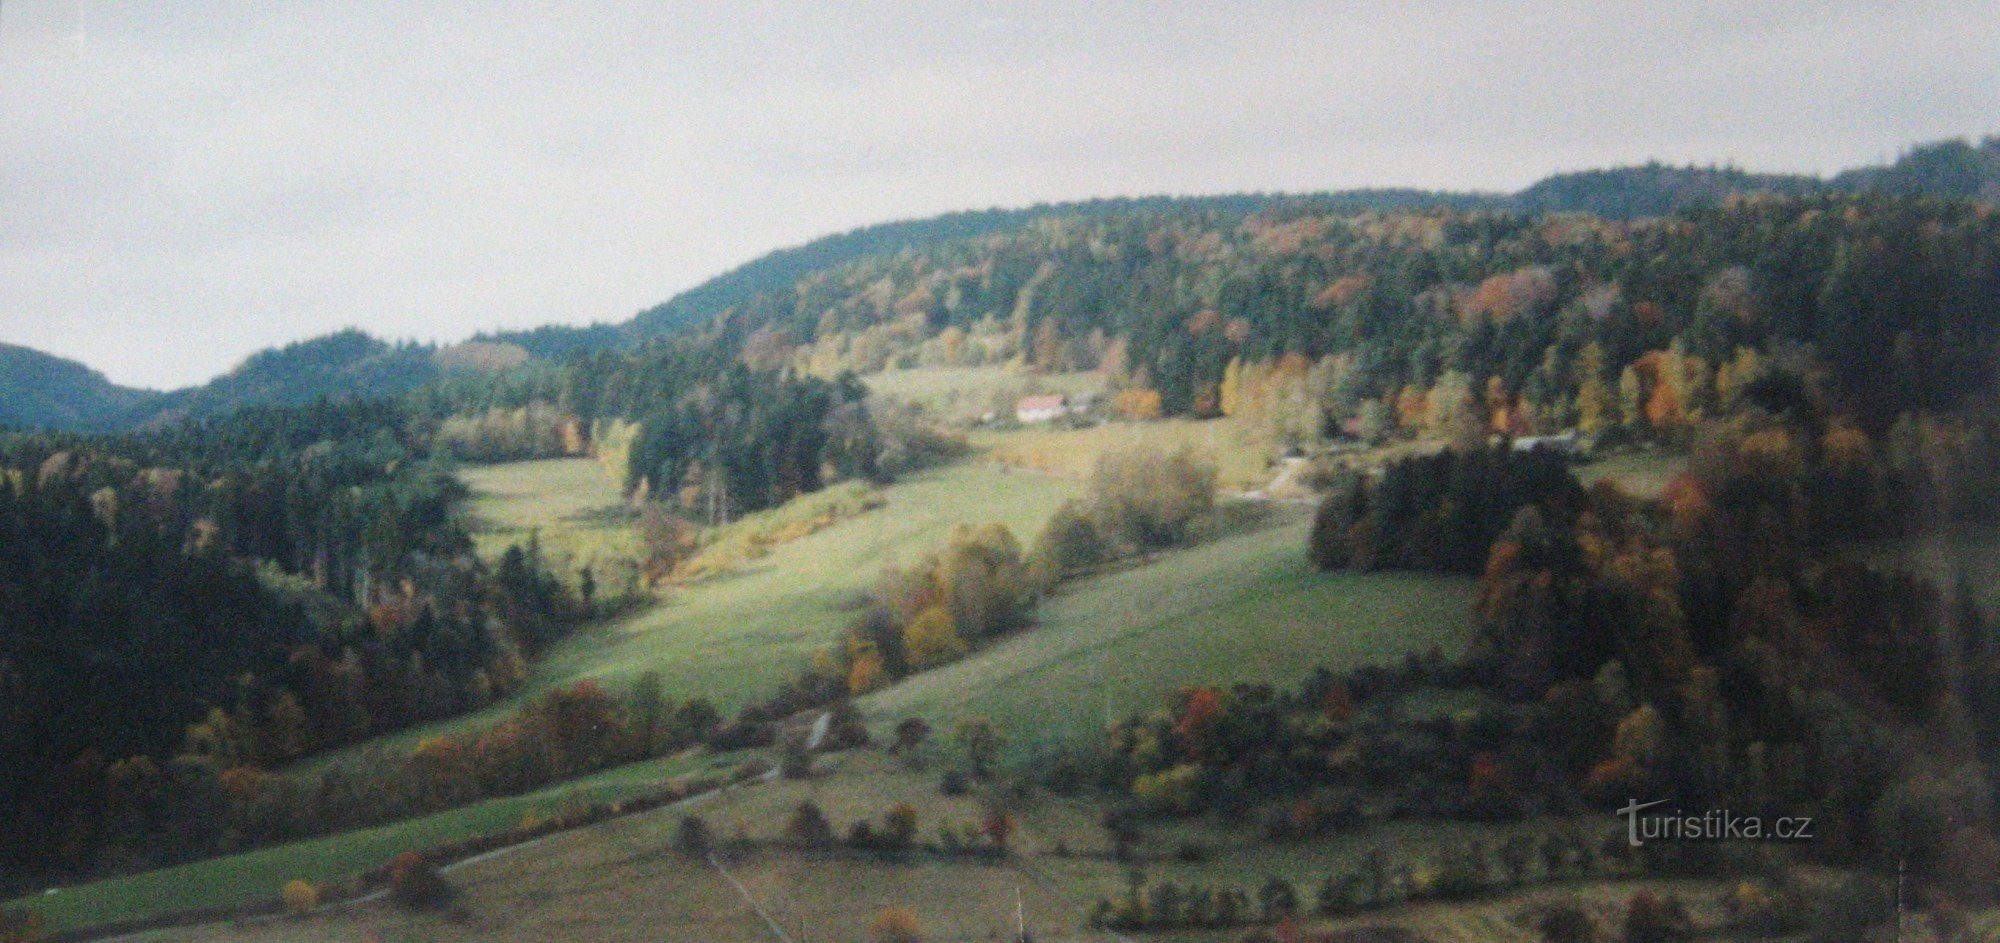 Držková melletti táj